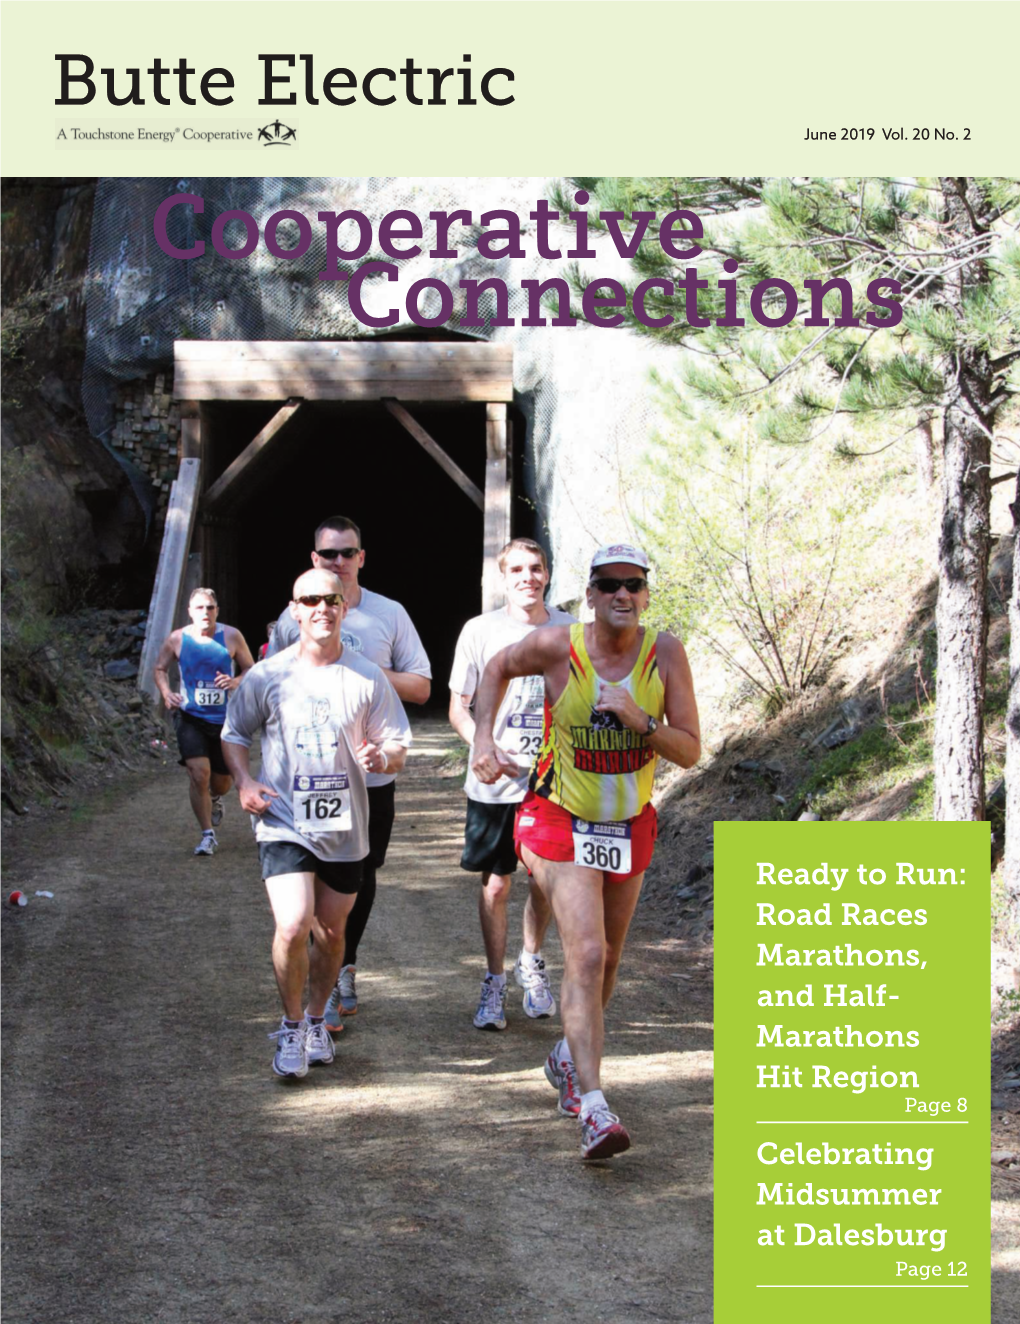 Road Races Marathons, and Half- Marathons Hit Region Page 8 Celebrating Midsummer at Dalesburg Page 12 CEO’S COLUMN